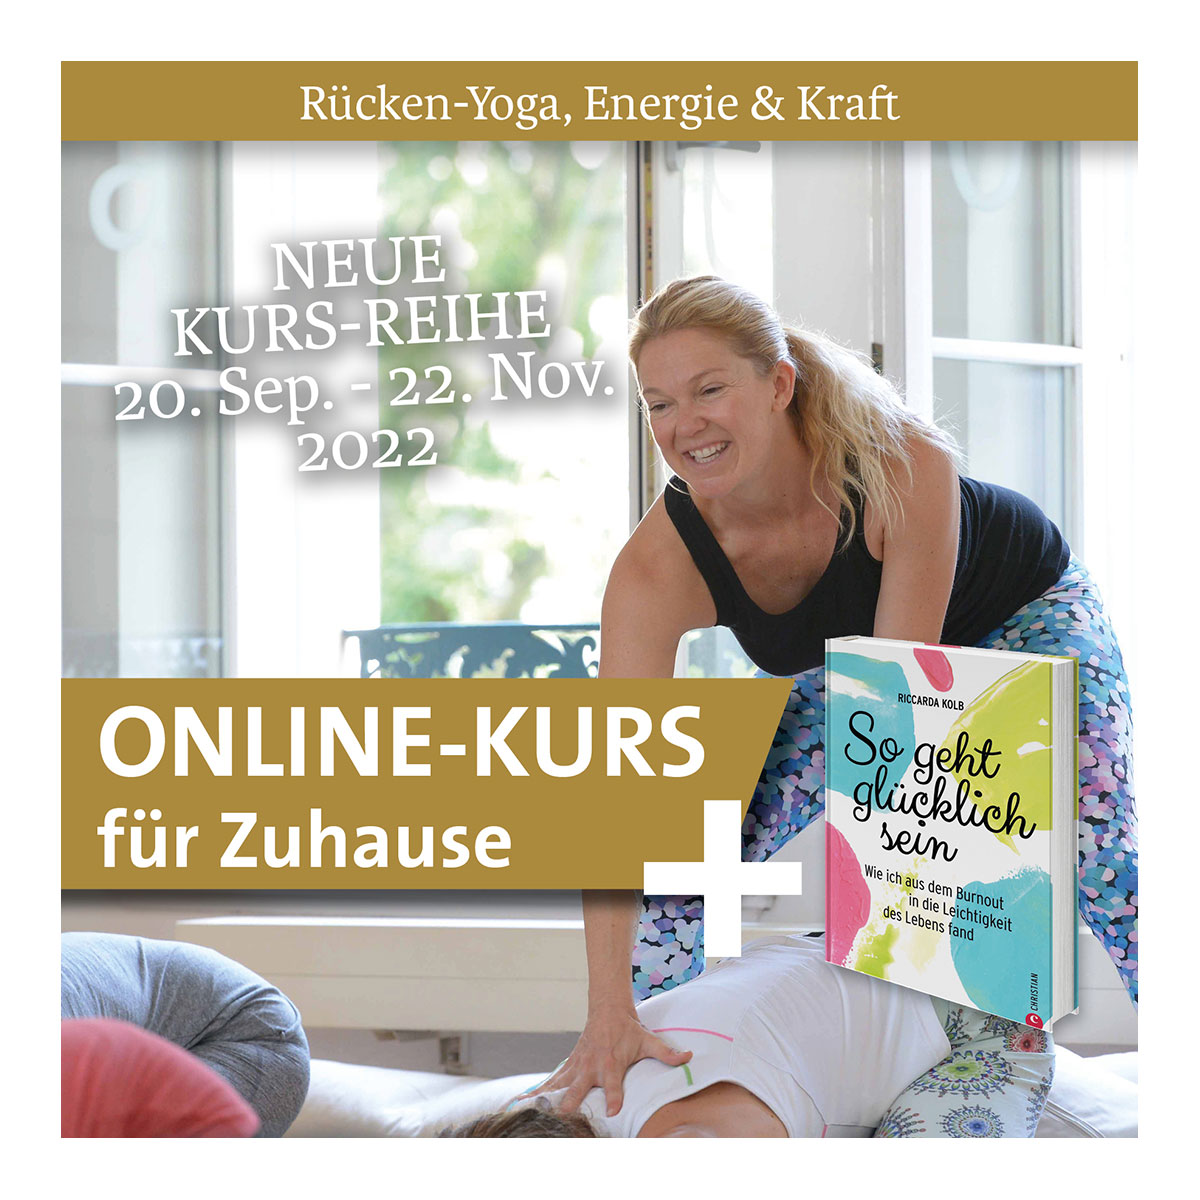 Online-Kurs, Rücken-Yoga, Energie & Kraft